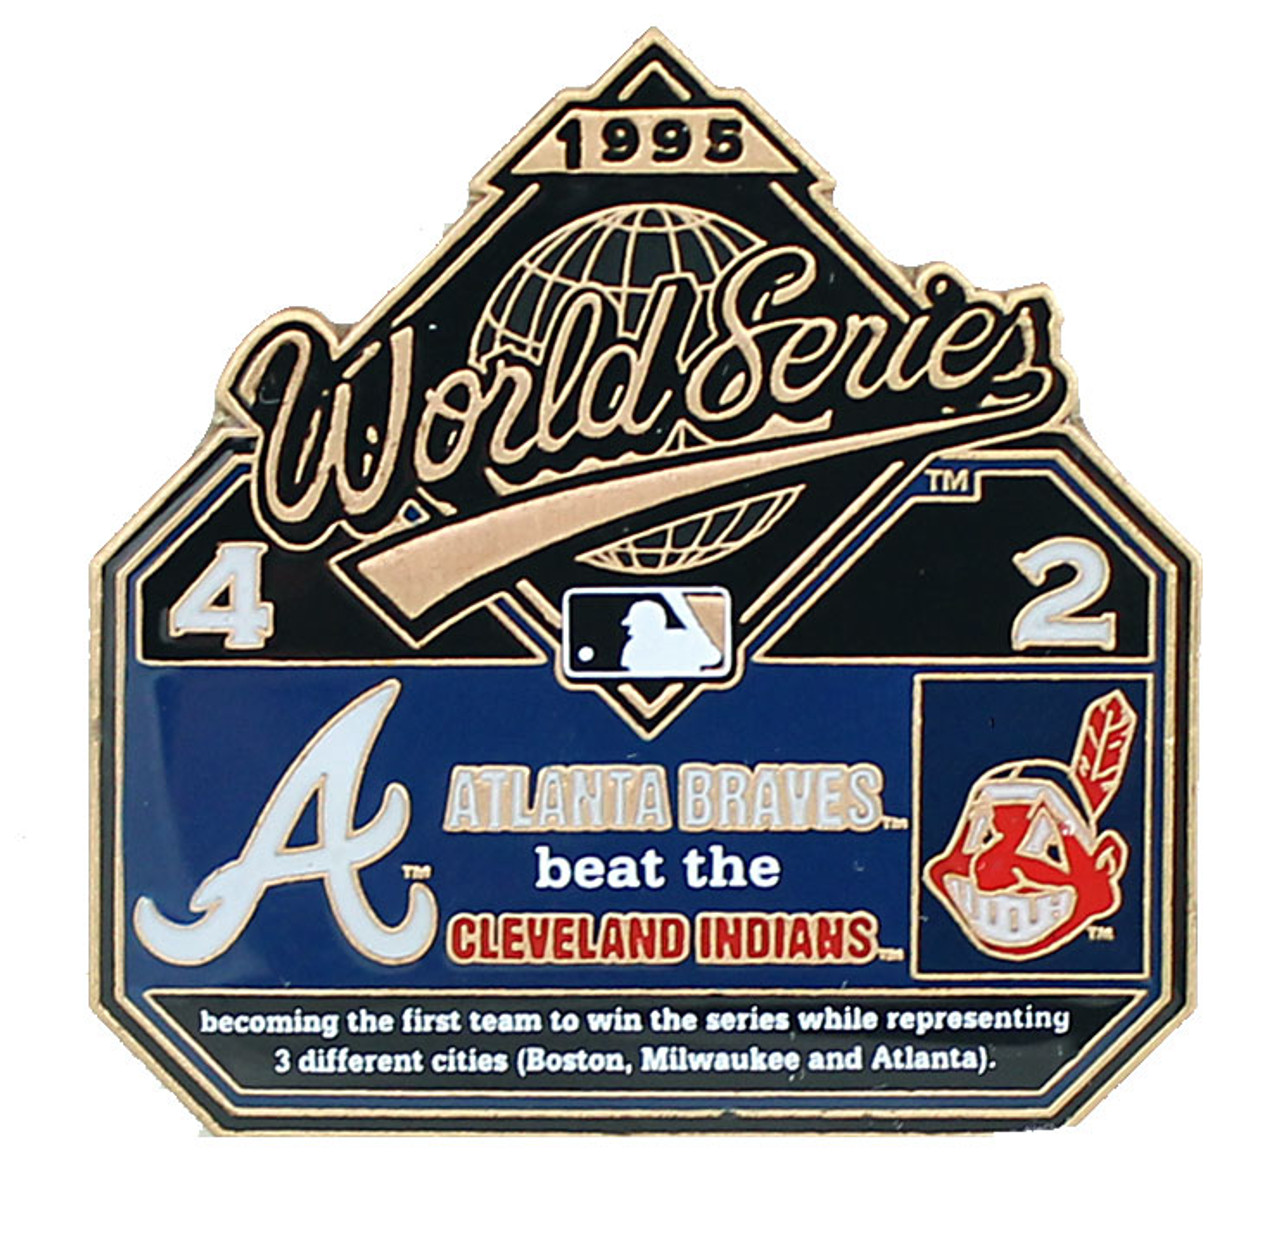 Atlanta Braves World Series WINS! (1957 and 1995 World Series